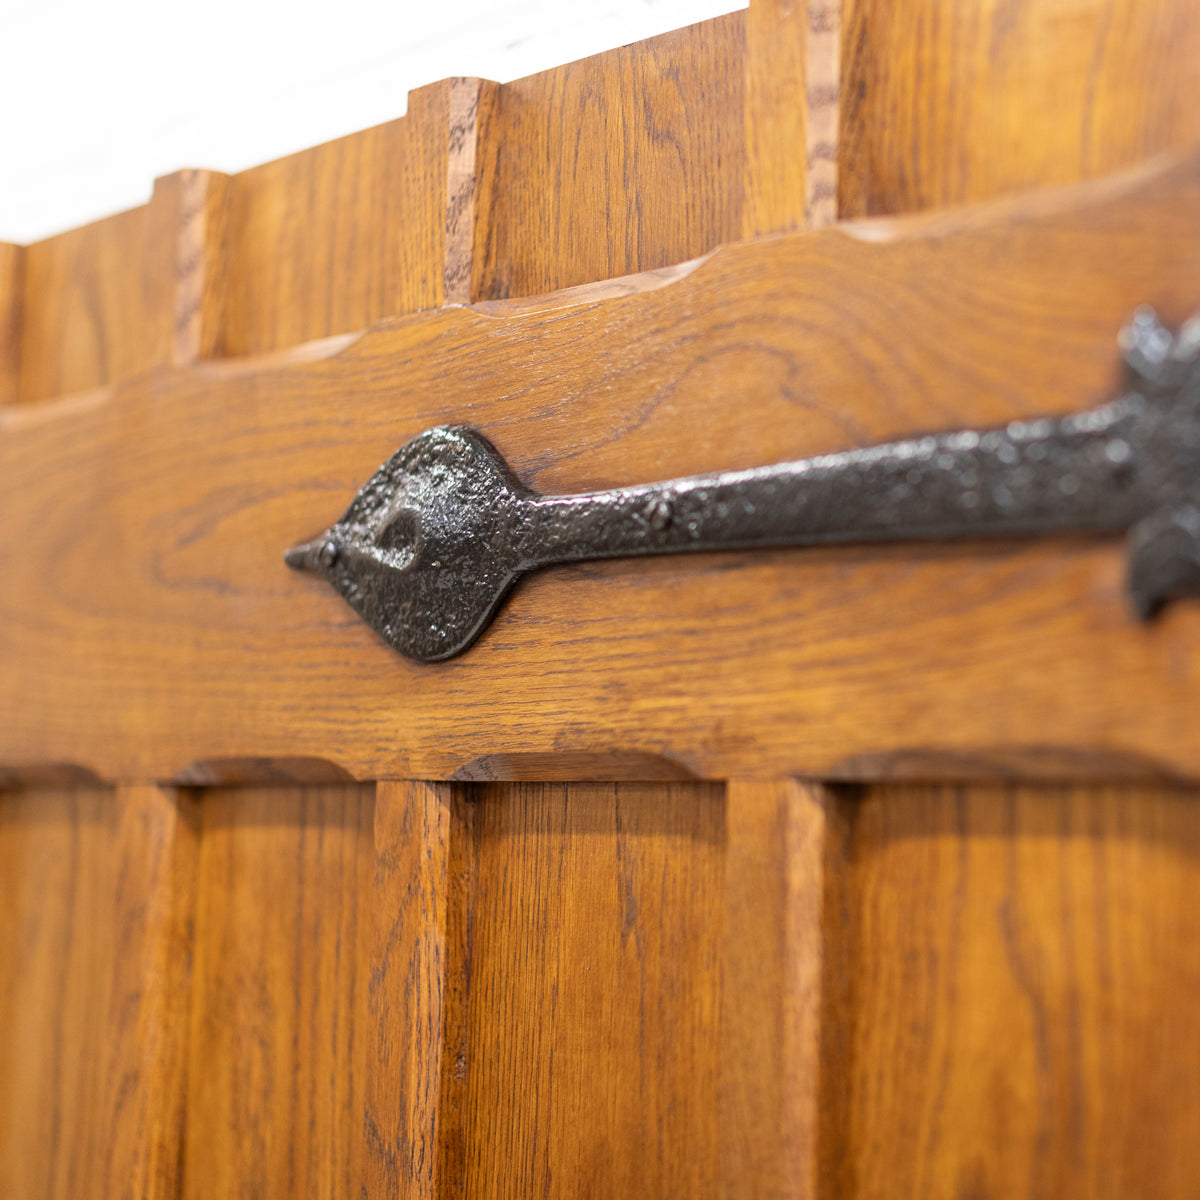 Reclaimed Oak Latch Door - 200cm x 76cm | The Architectural Forum